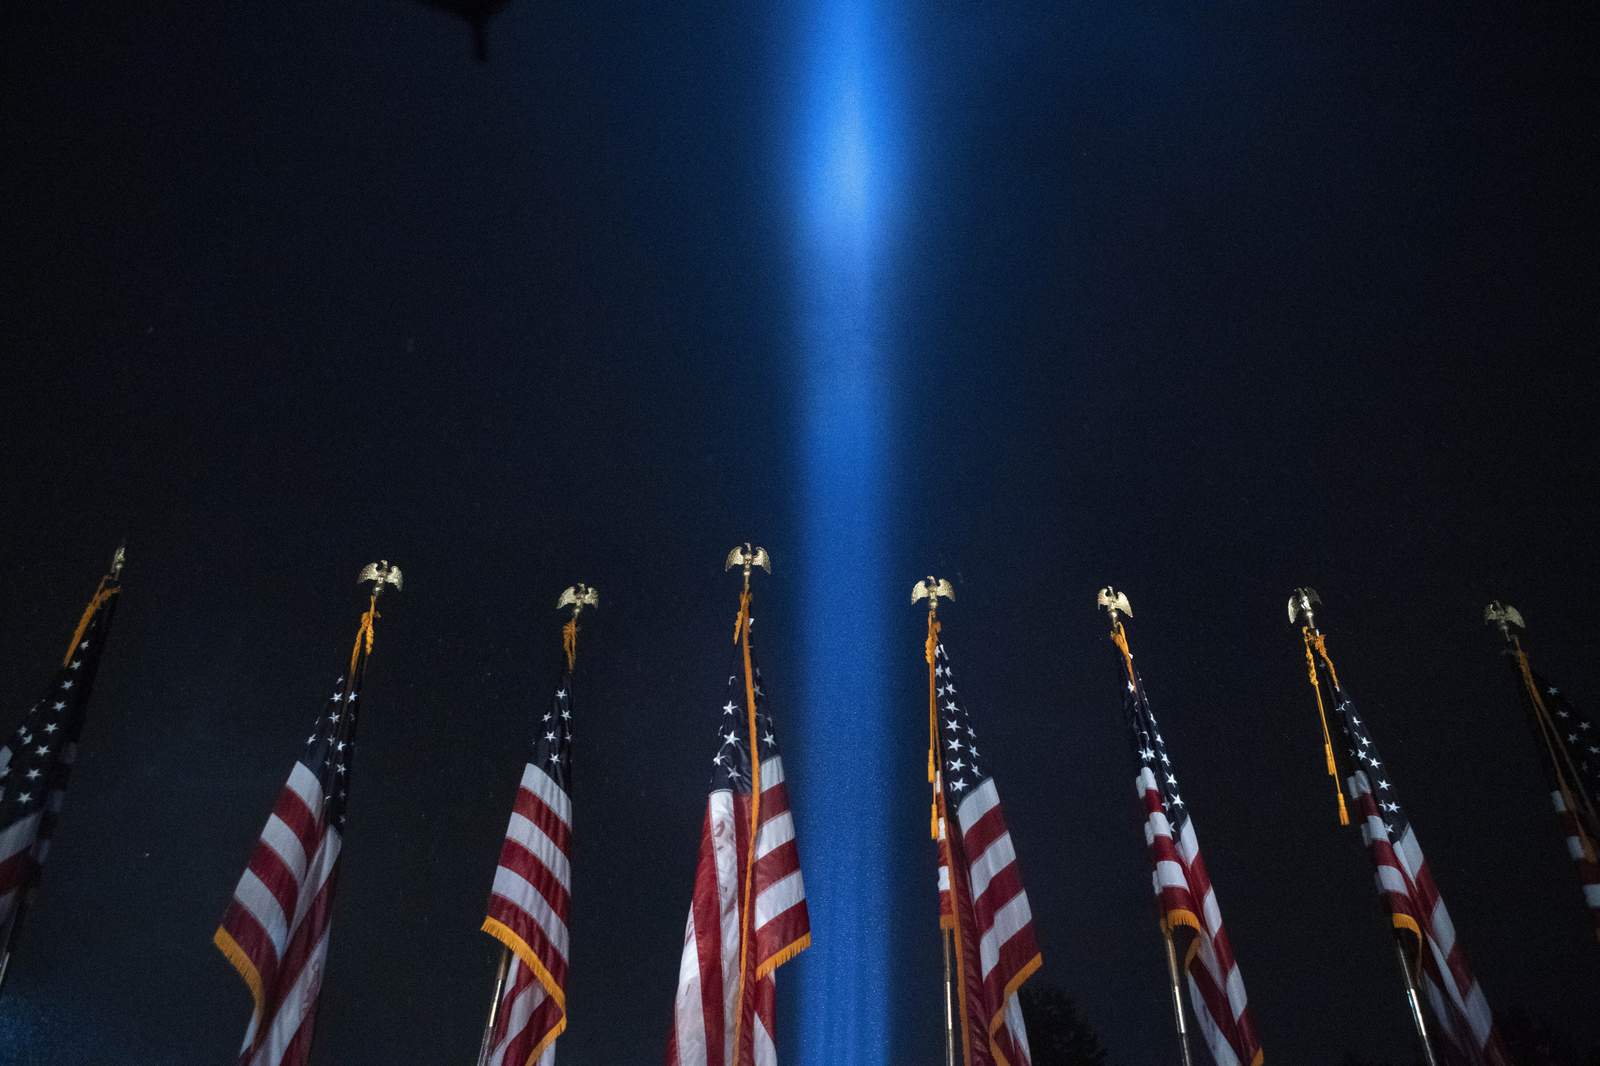 Paul Gross recalls September 11 attacks: ‘A plane just hit the World Trade Center’